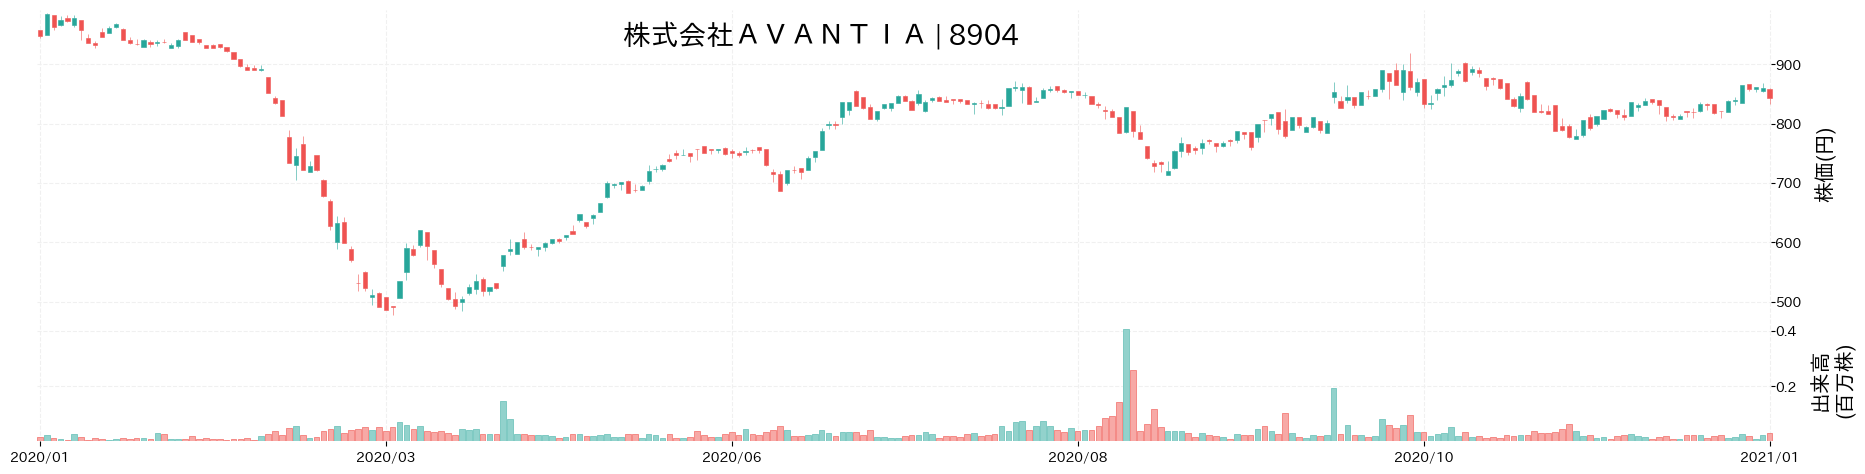 AVANTIAの株価推移(2020)